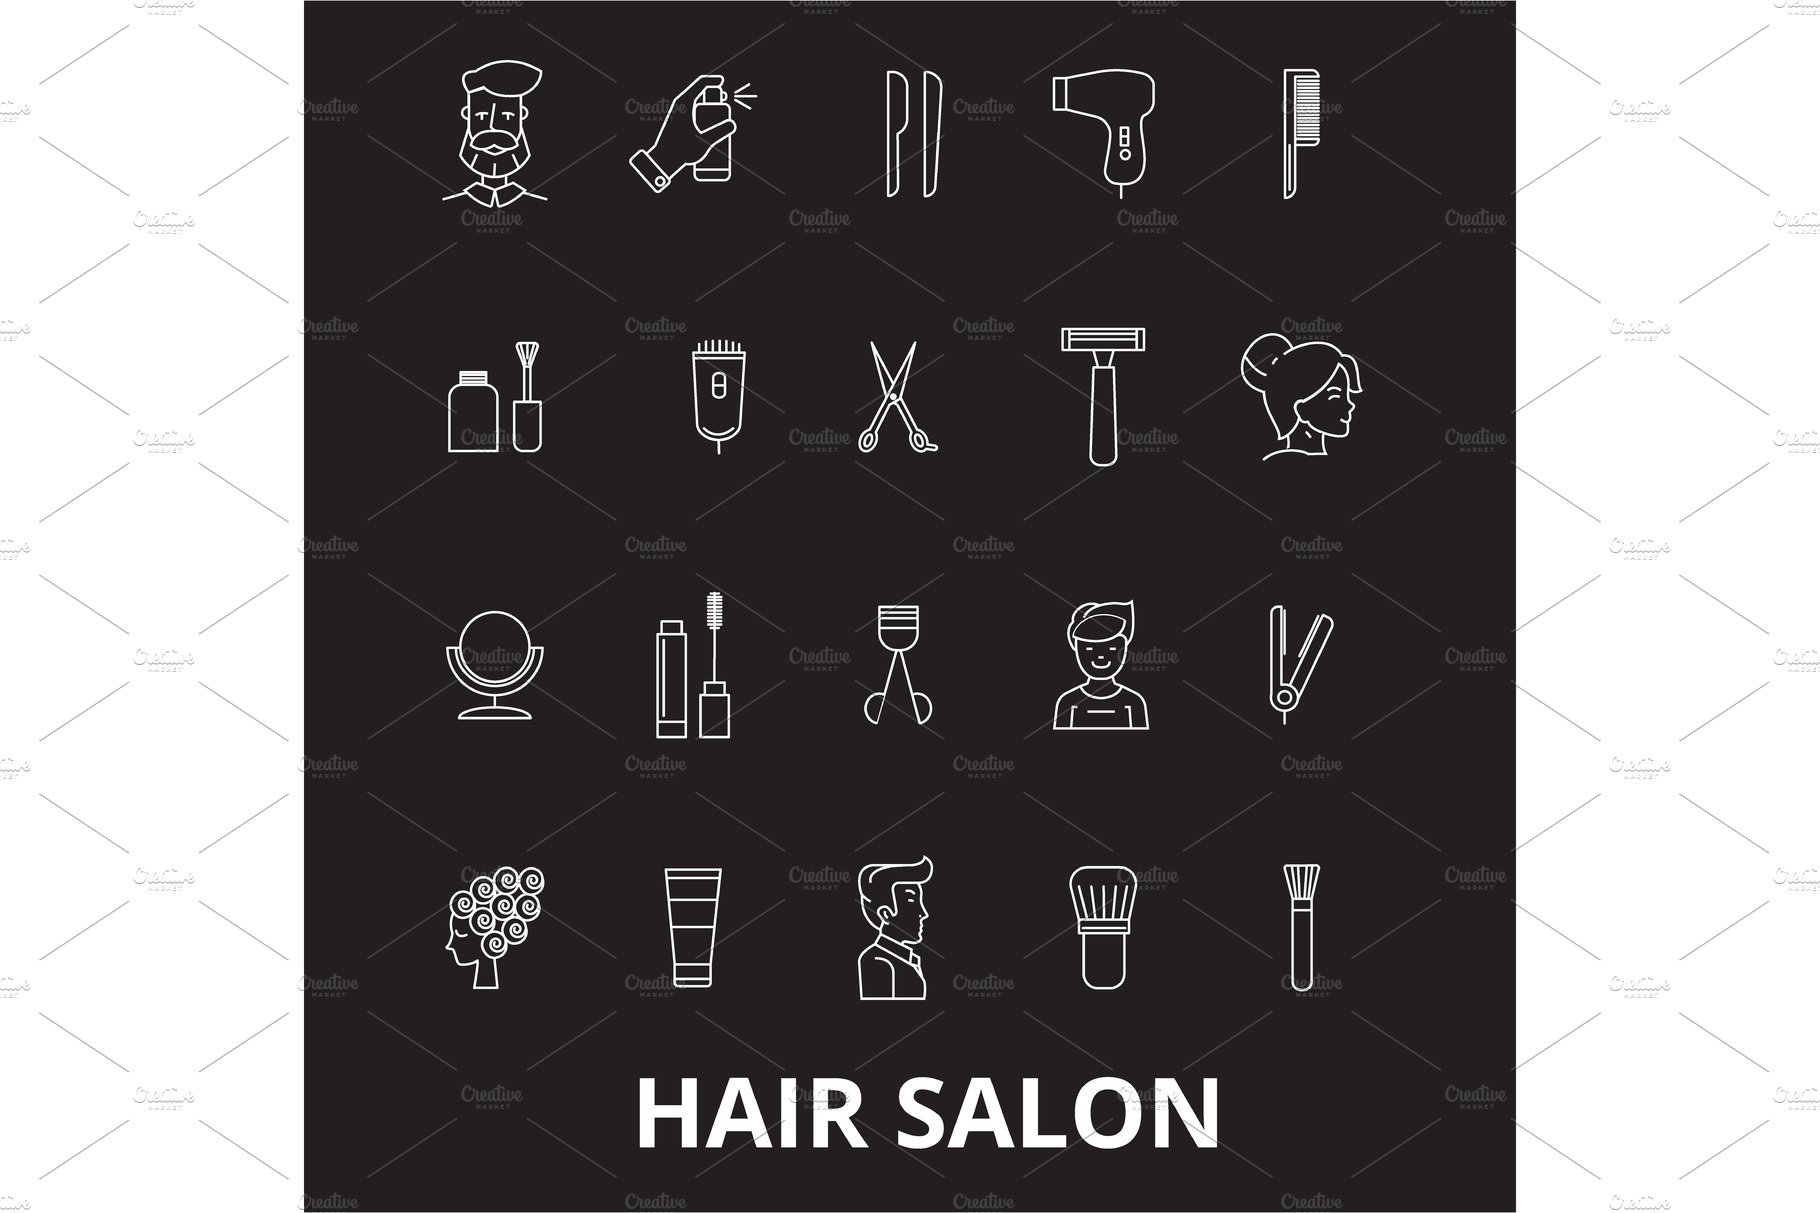 Hair salon editable line icons cover image.